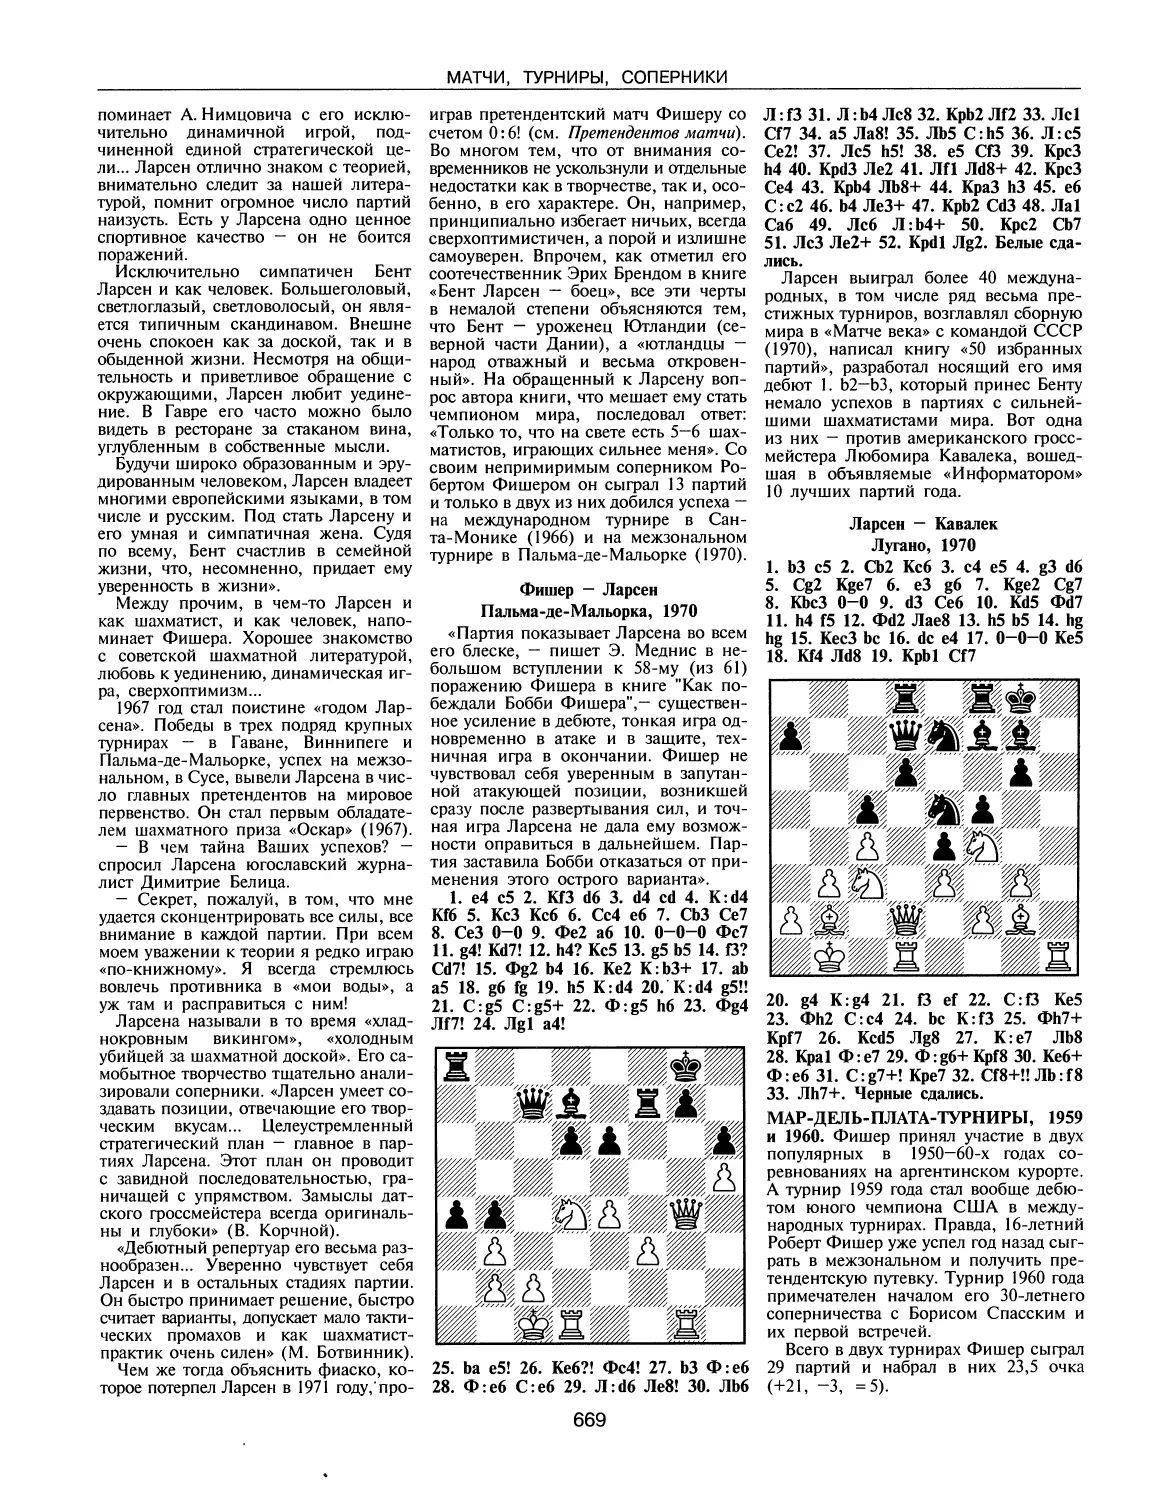 Мар-дель-Плата-турниры, 1959, 1960